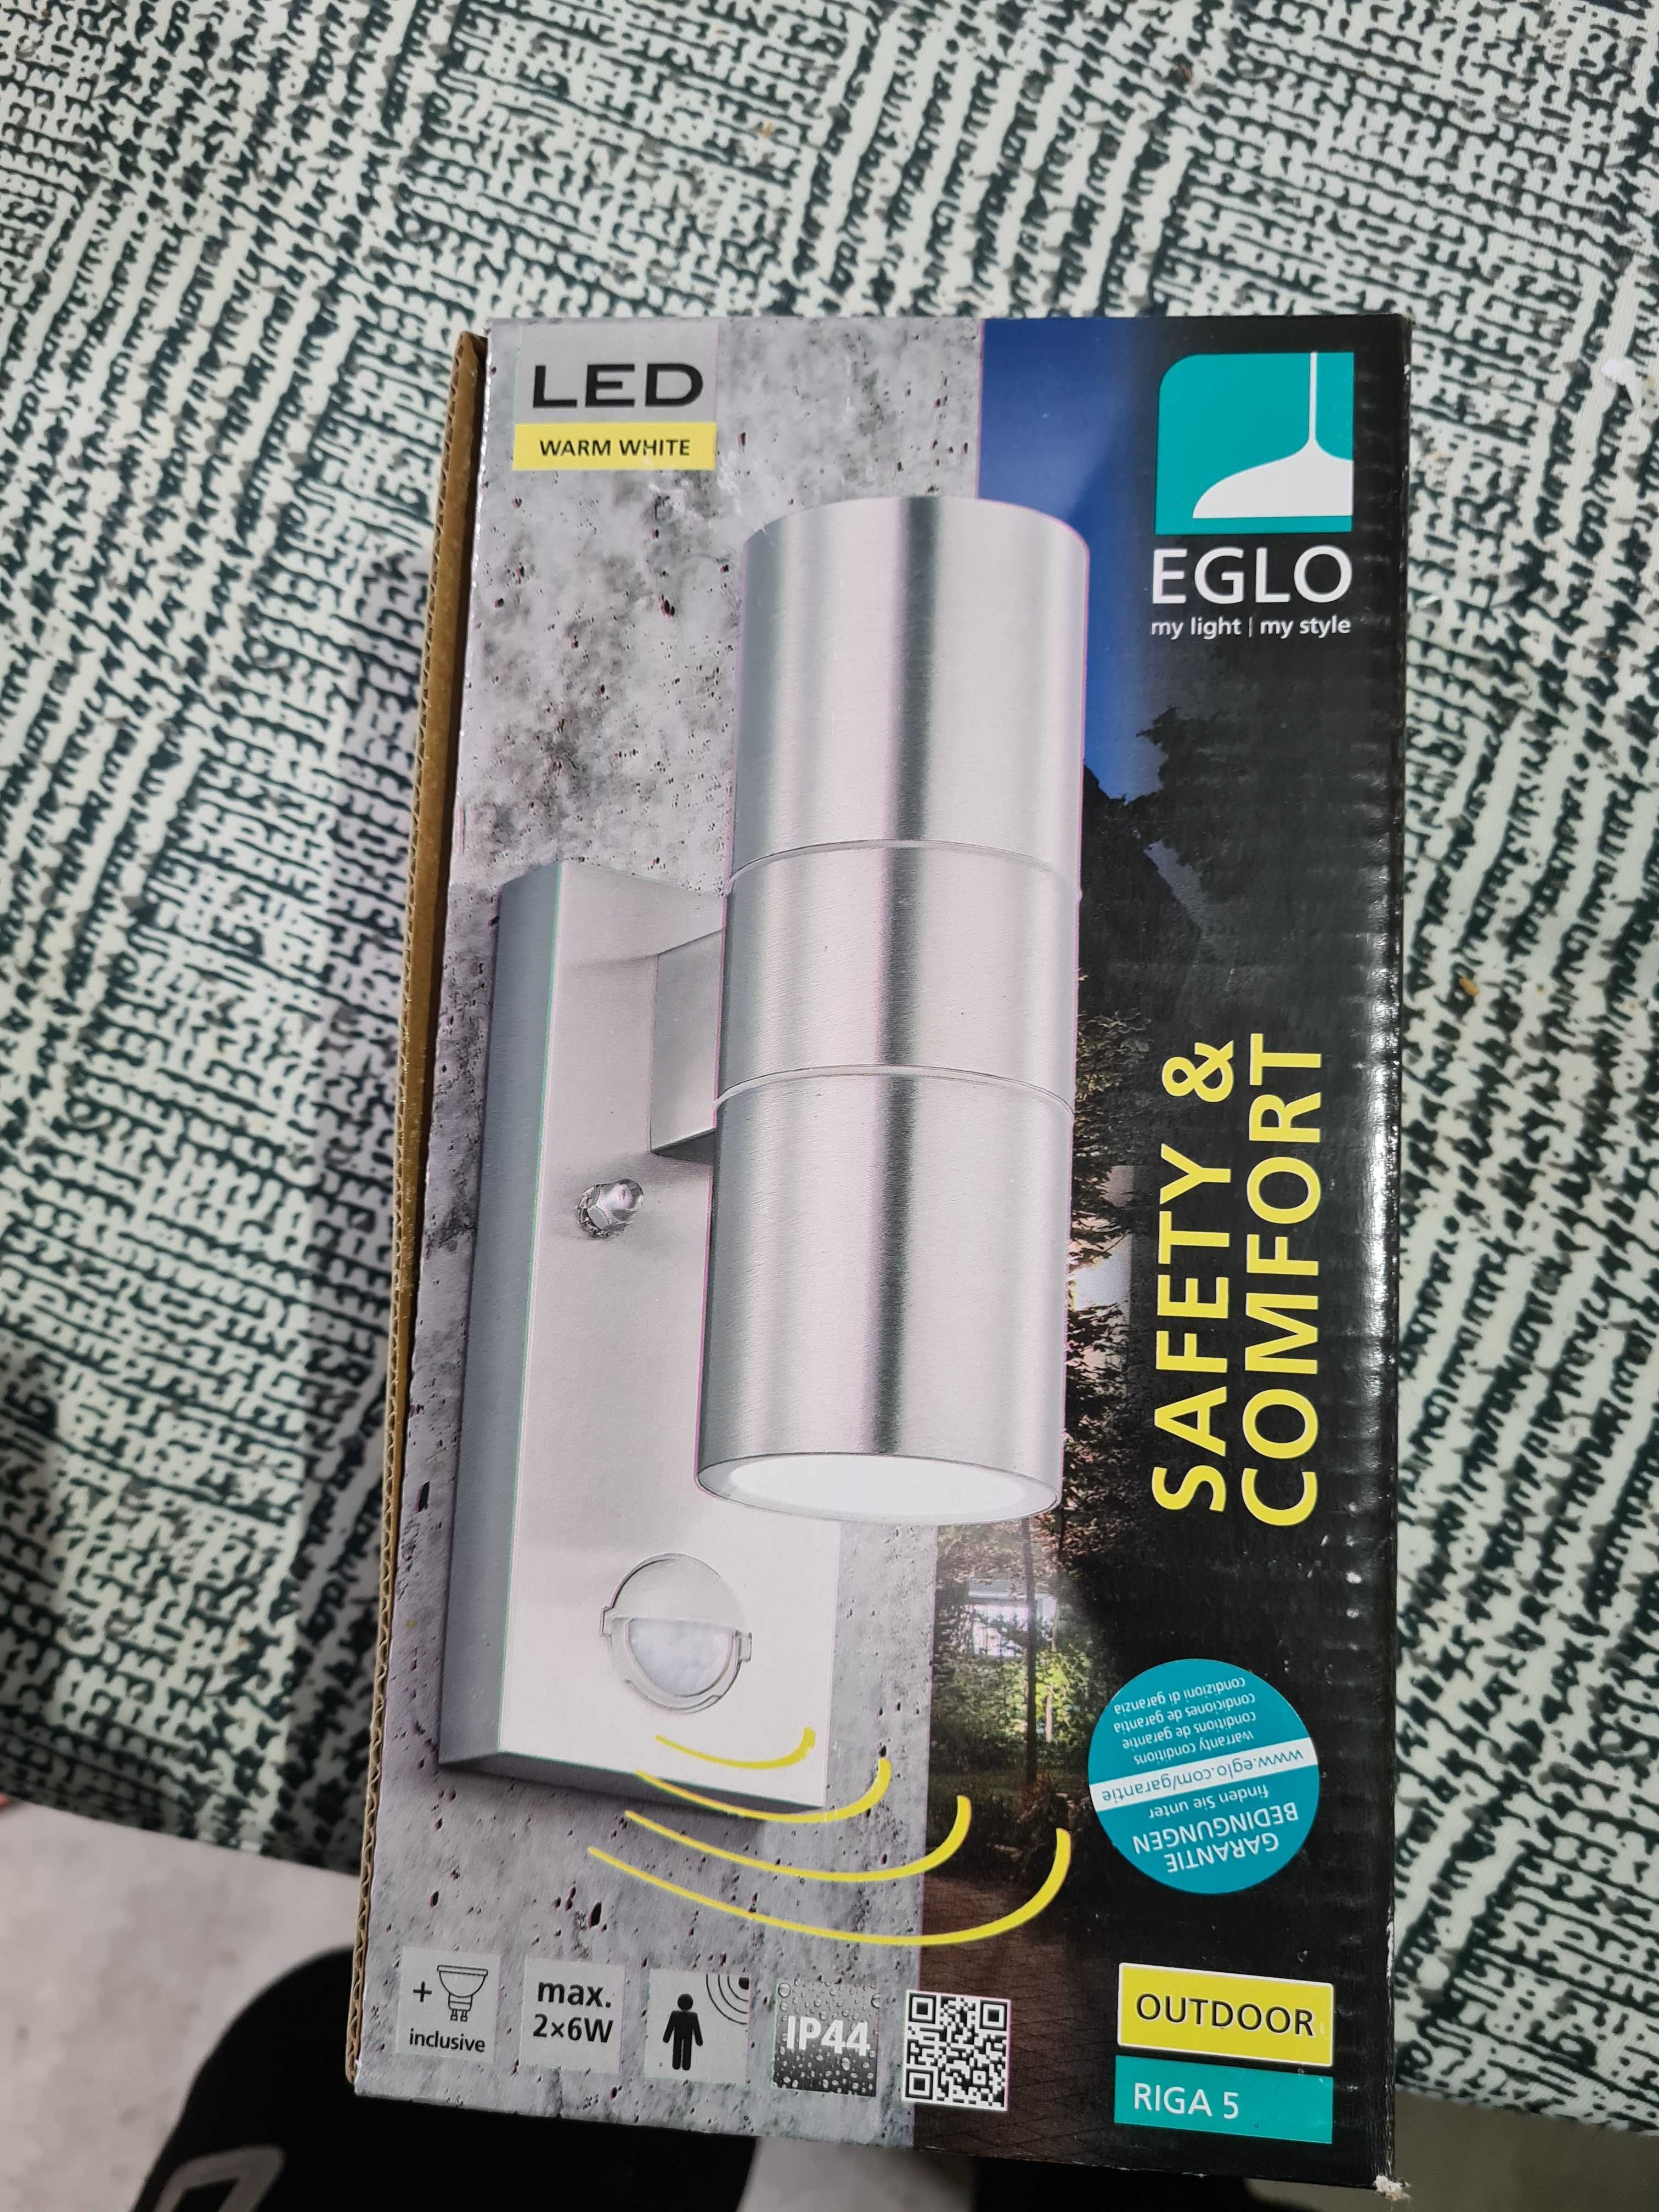 EGLO Zewnętrzna lampa ścienna LED Riga 5, 2-punktowa lampa